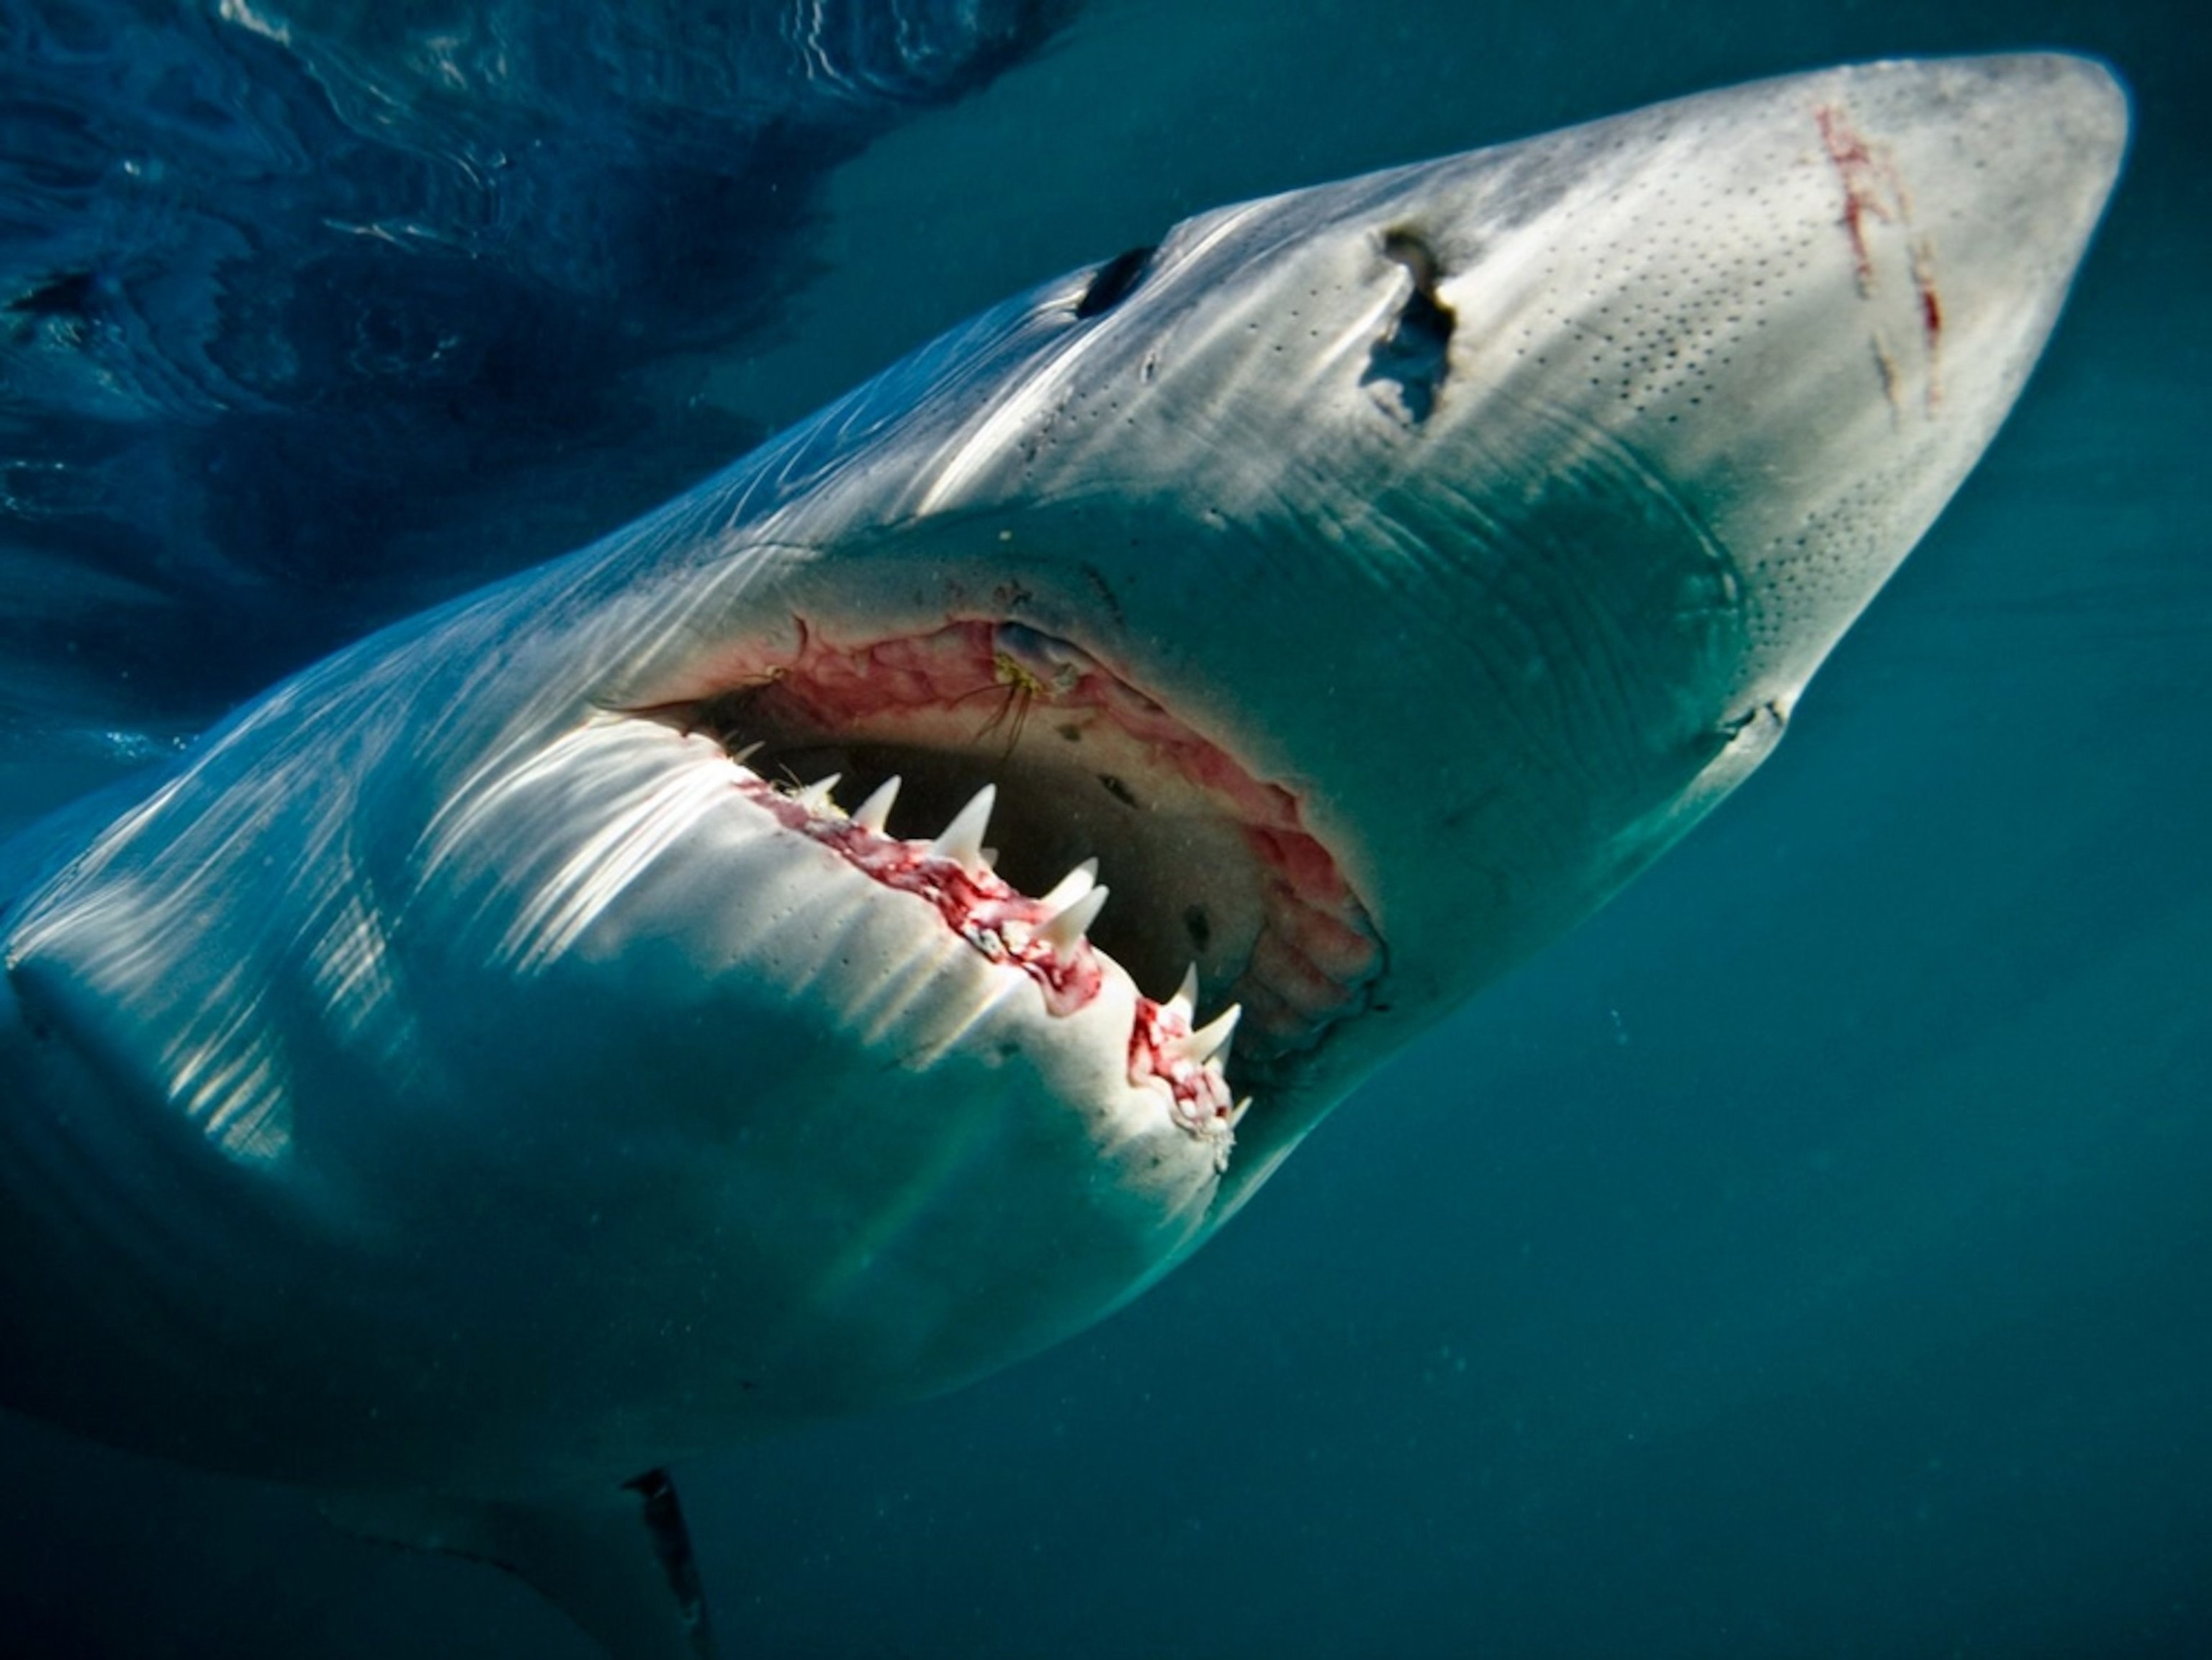 Самая опасная фотка. Чернорылая акула. Большая белая акула National Geographic. Большая белая акула 6 метров.